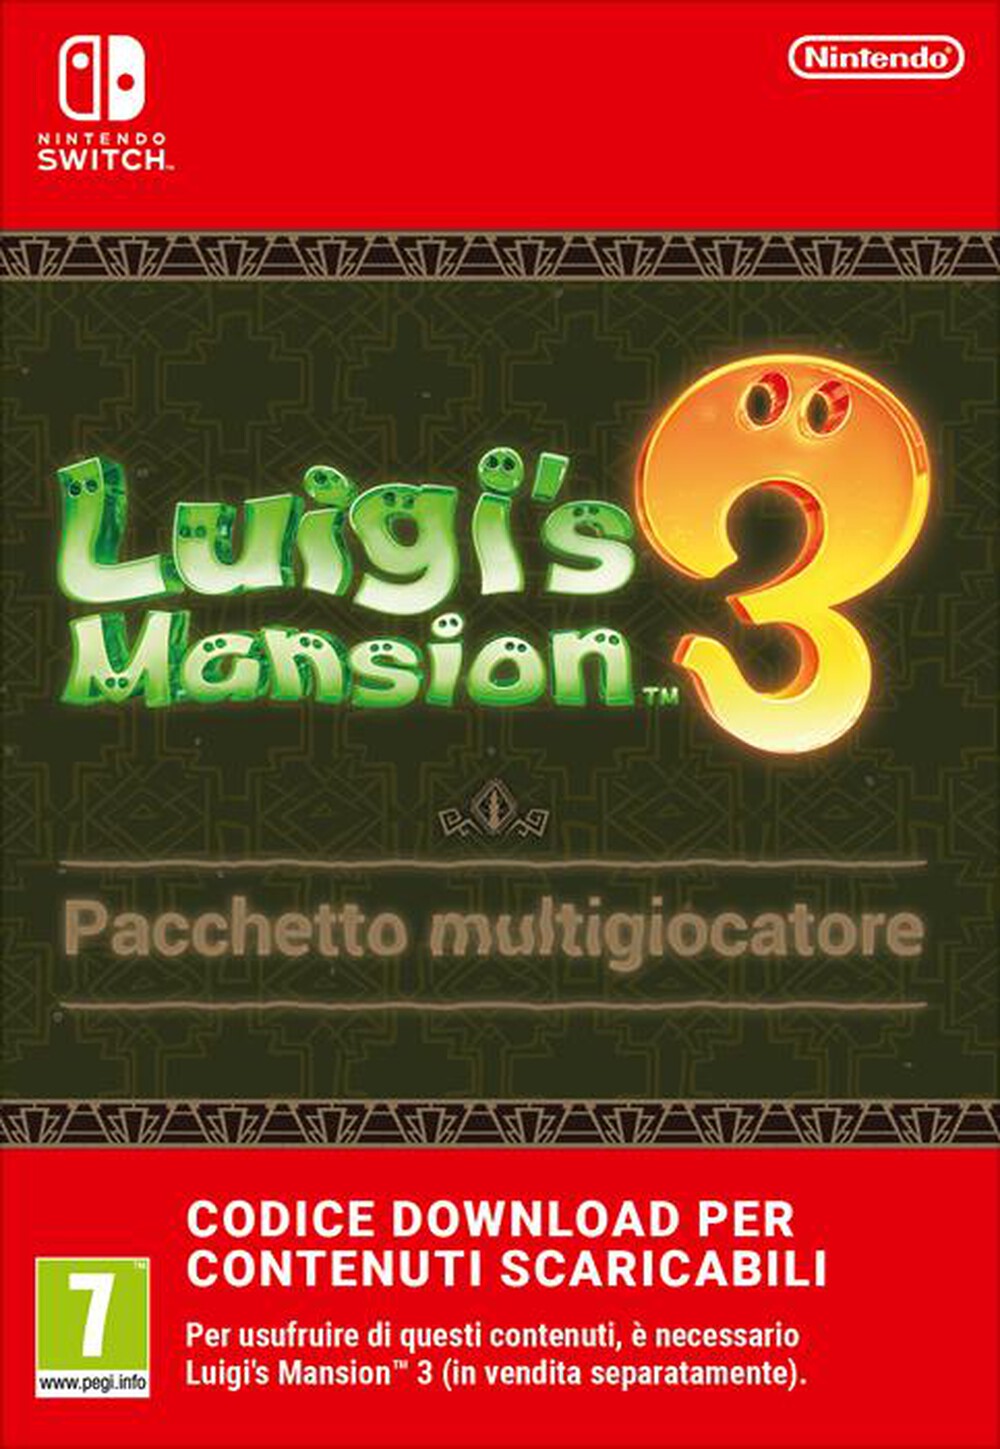 "NINTENDO - Luigi's Mansion 3 Multiplayer Pack"